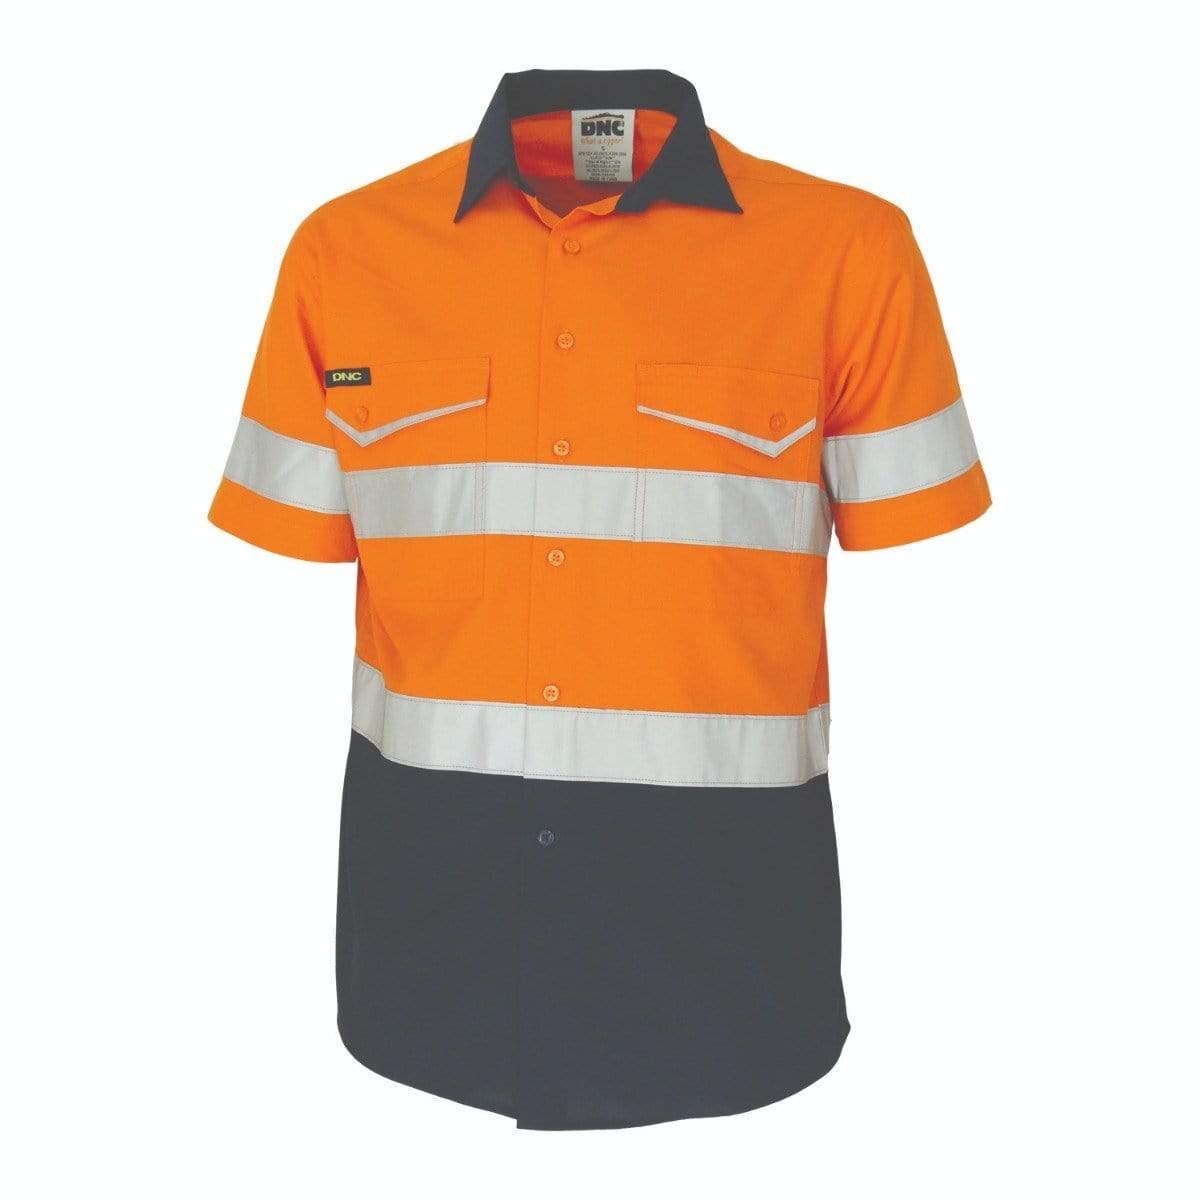 Dnc Workwear Two-tone Ripstop Cotton Short Sleeve Shirt With Csr Reflective Tape - 3587 Work Wear DNC Workwear Orange/Navy XS 